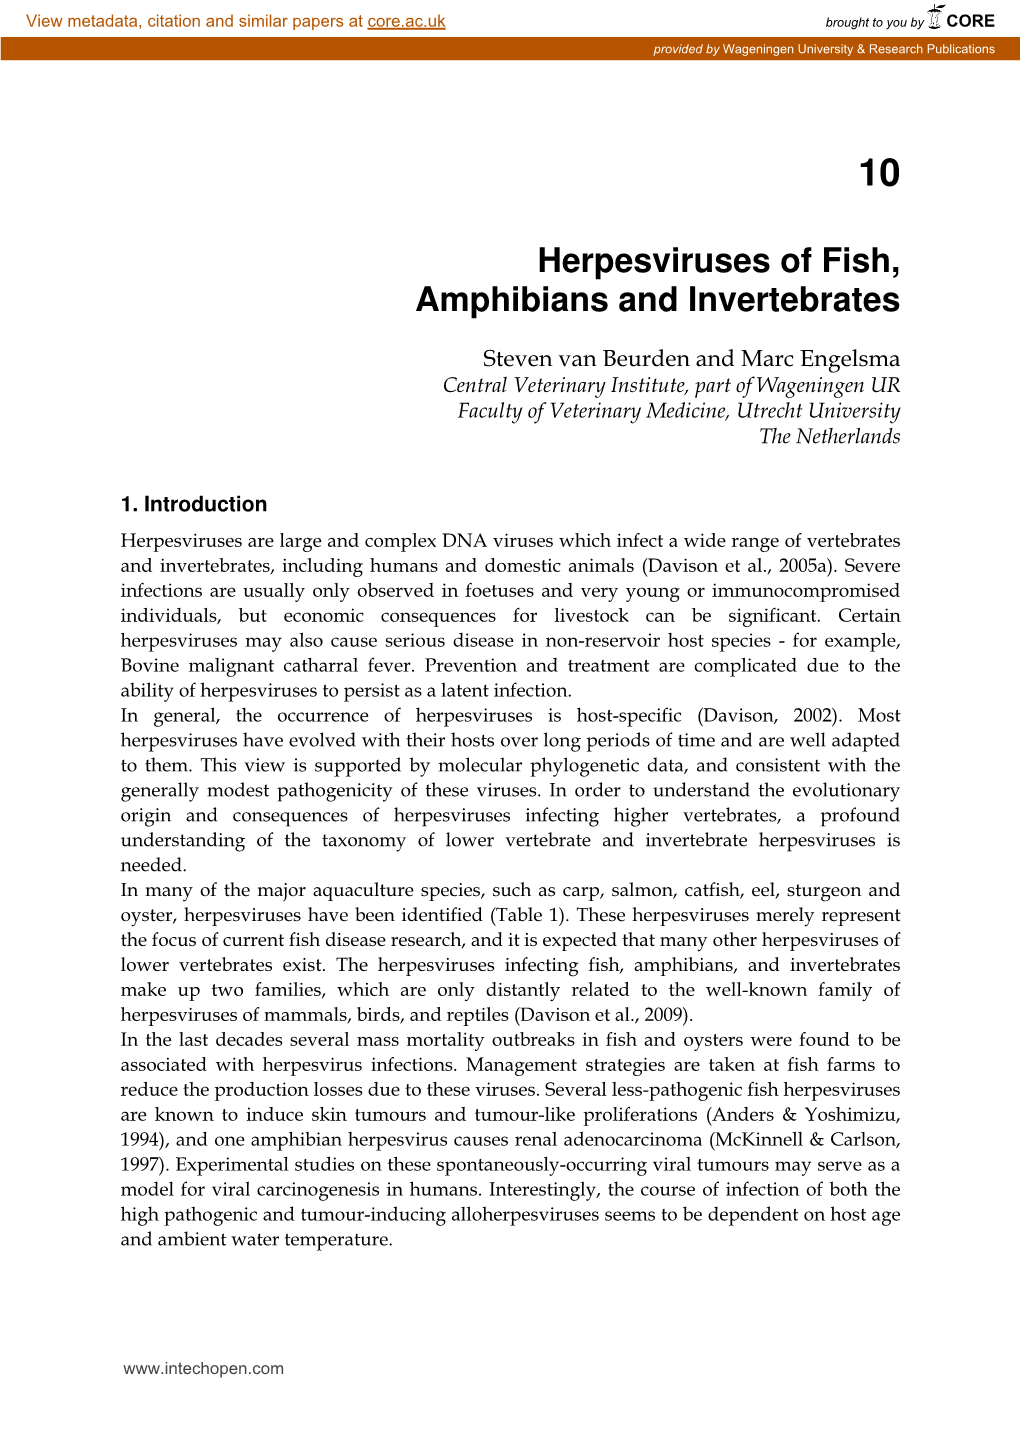 Herpesviruses of Fish, Amphibians and Invertebrates